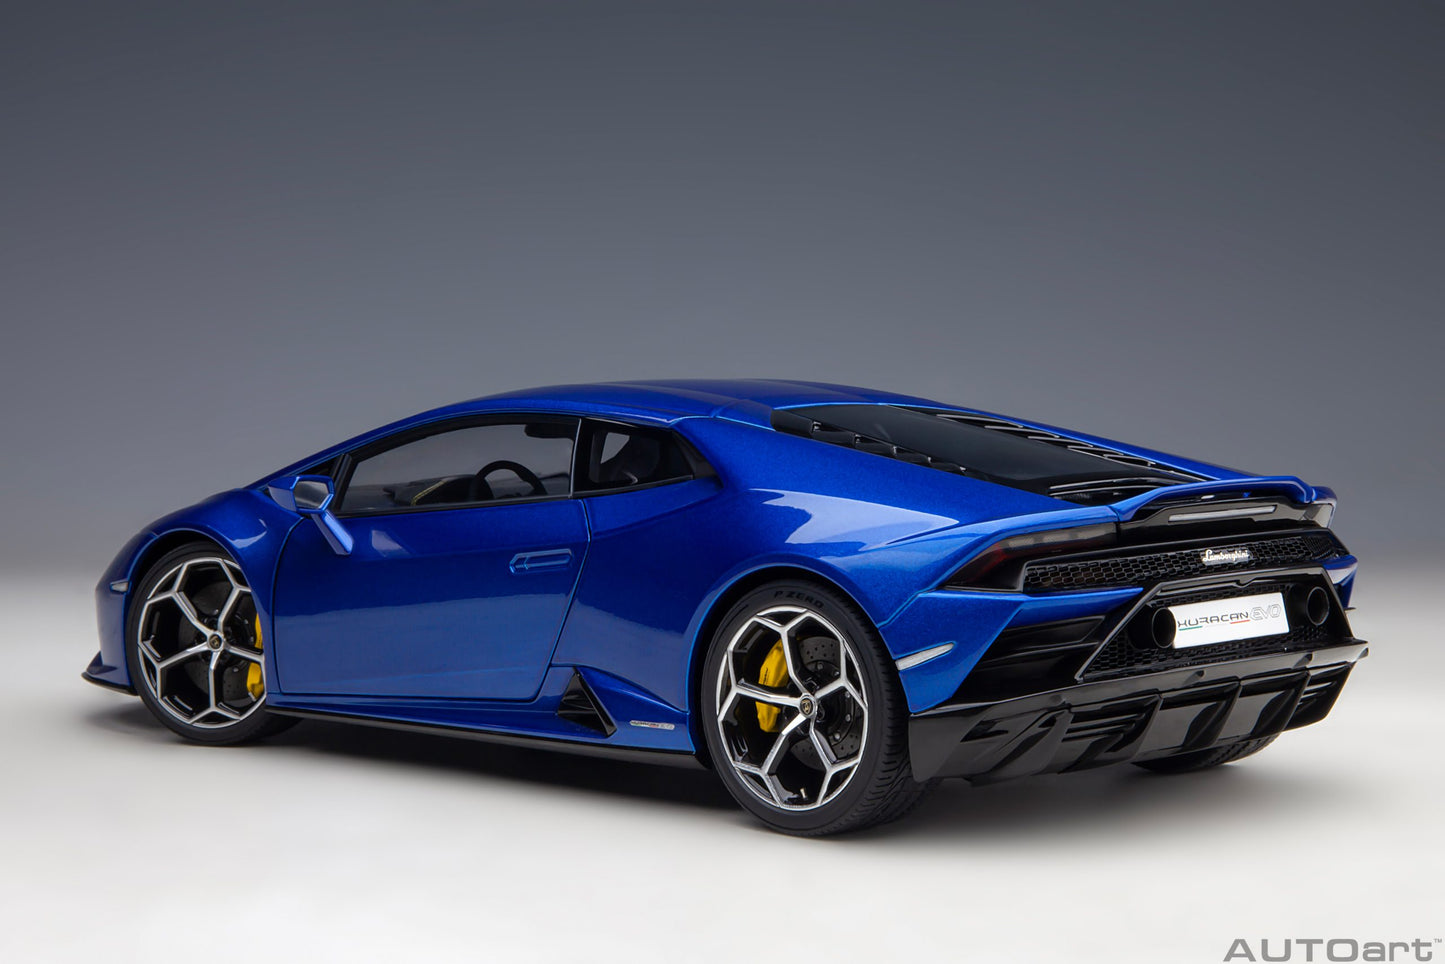 AUTOart 1:18 Lamborghini Huracan Evo (Blu Nethuns) 79212